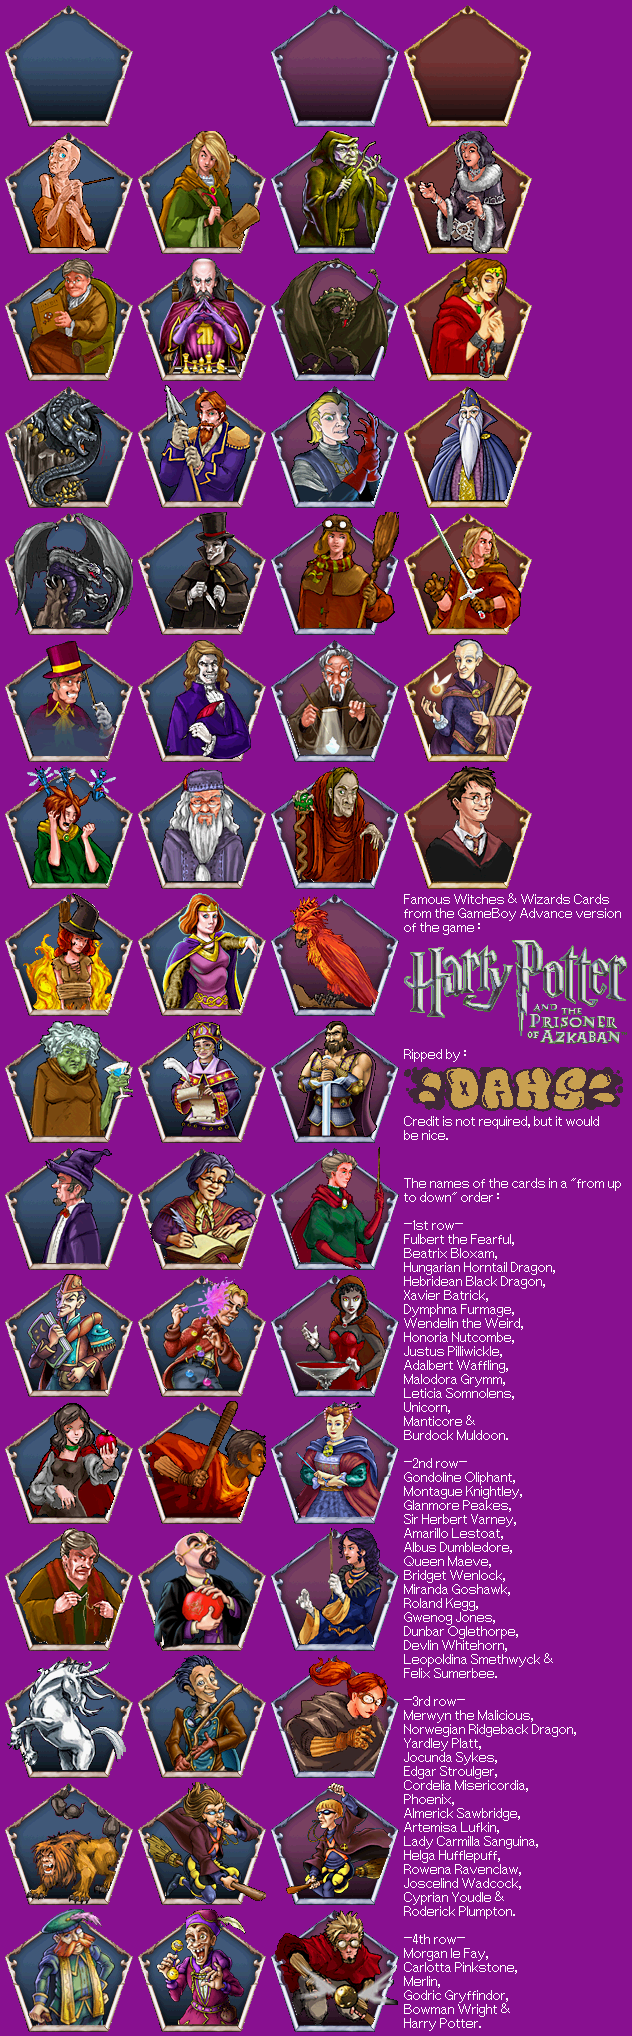 Harry Potter & the Prisoner of Azkaban - Collector's Cards